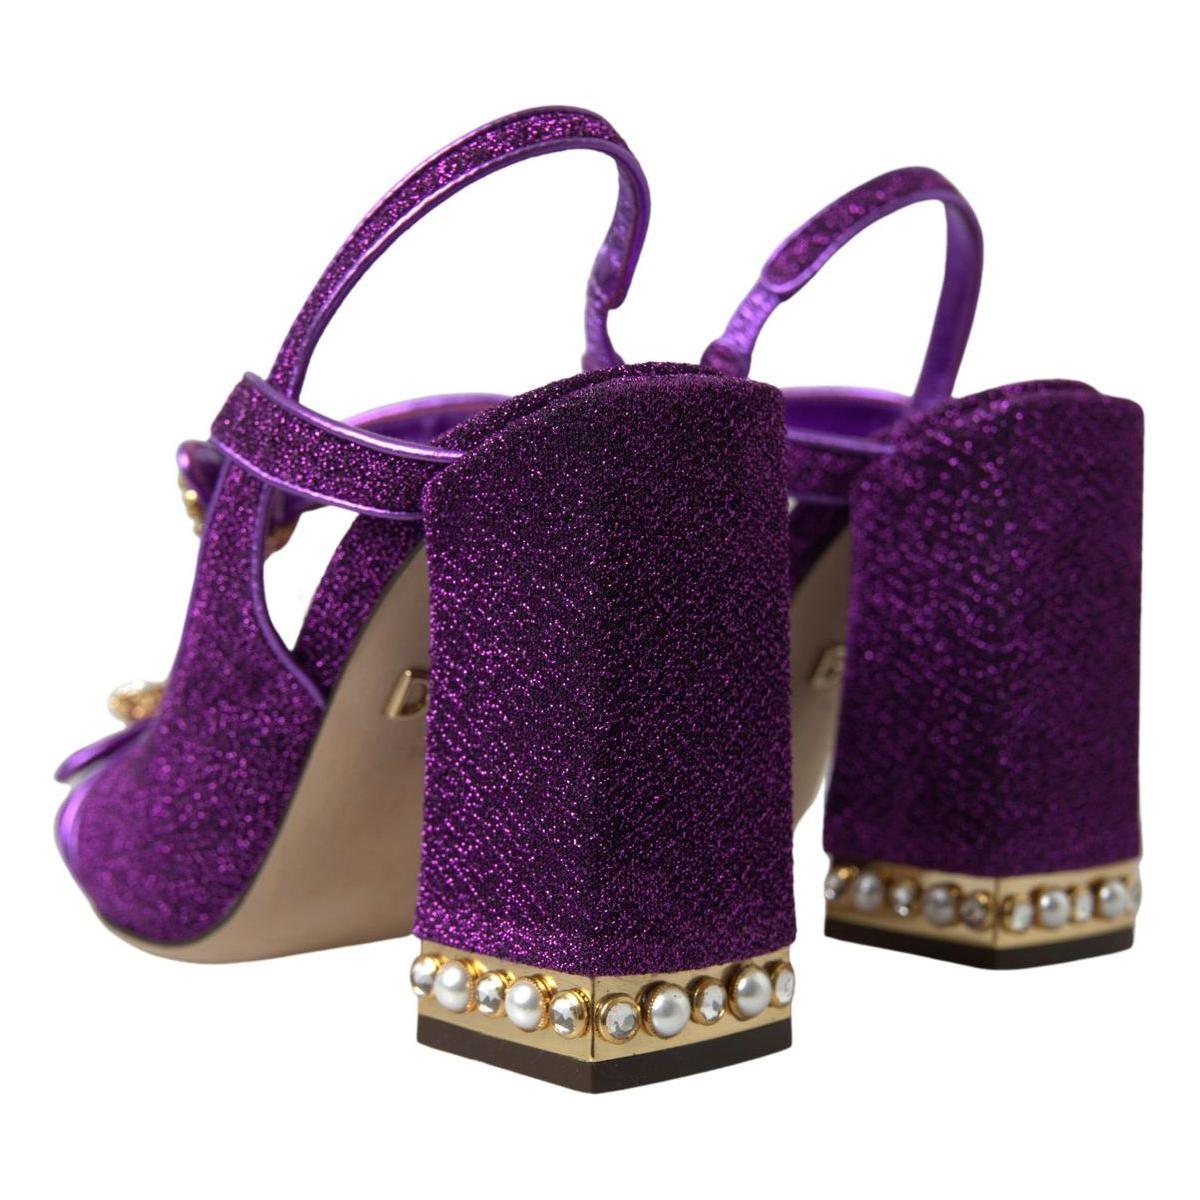 Dolce & Gabbana Elegant Purple Ankle Strap Heels purple-ankle-strap-sandals-crystal-shoes 465A0090-1-scaled-a2b9aec0-20a_2b527f29-6e69-426a-b2b3-d9d26443305e.jpg